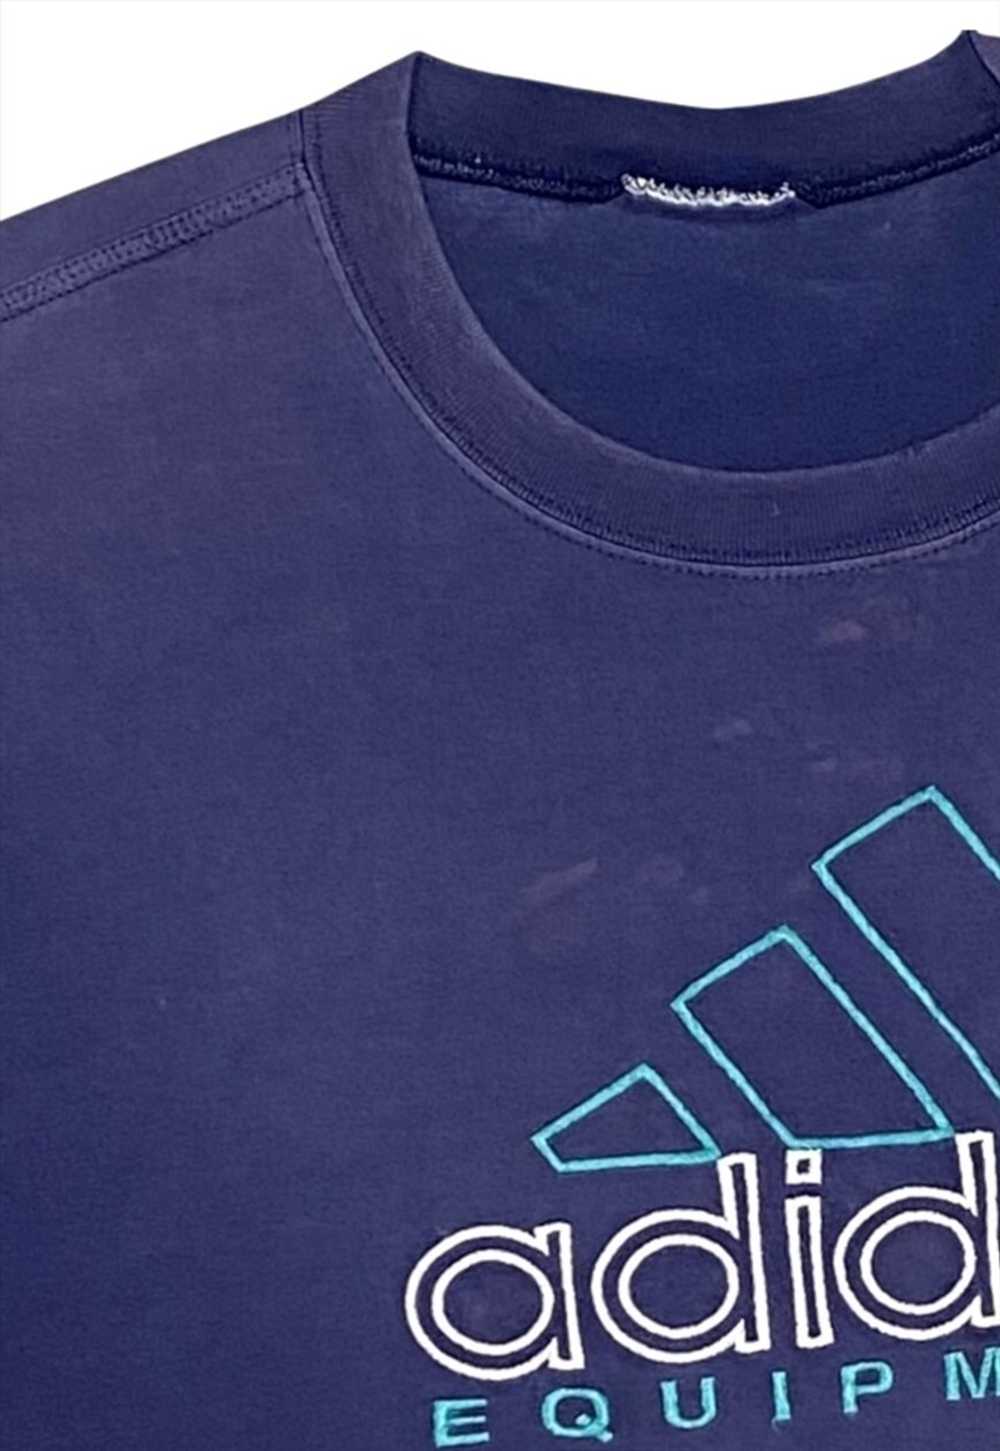 Adidas Equipment Dark Blue T-Shirt XL - image 3